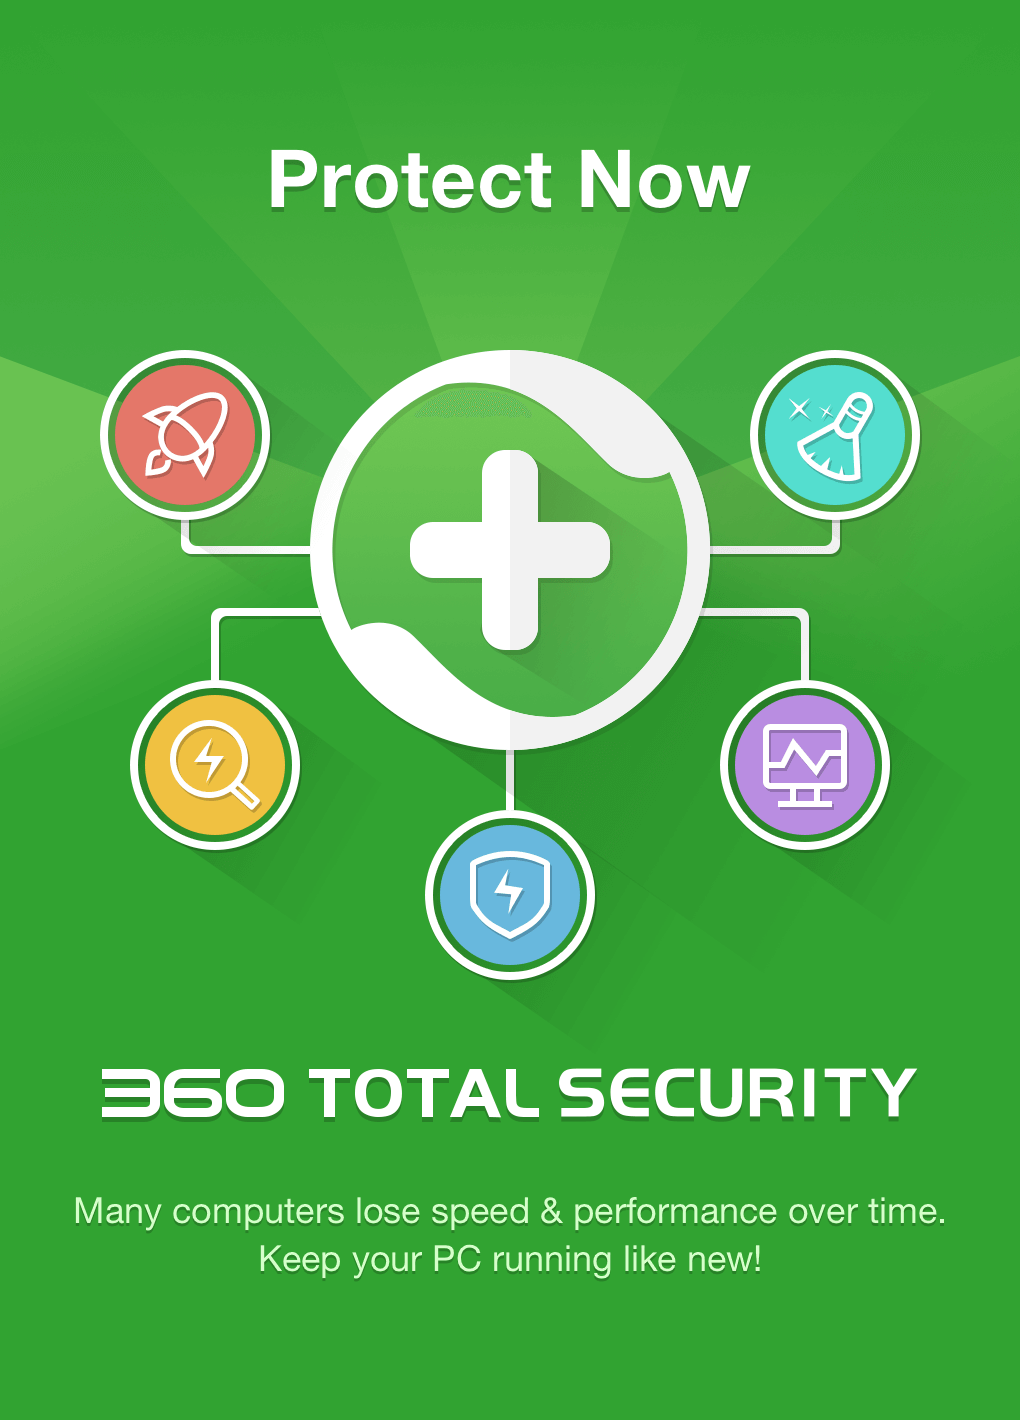 Qihoo 360 Logo - 360 Total Security: Free Antivirus Protection | Virus Scan & Removal ...